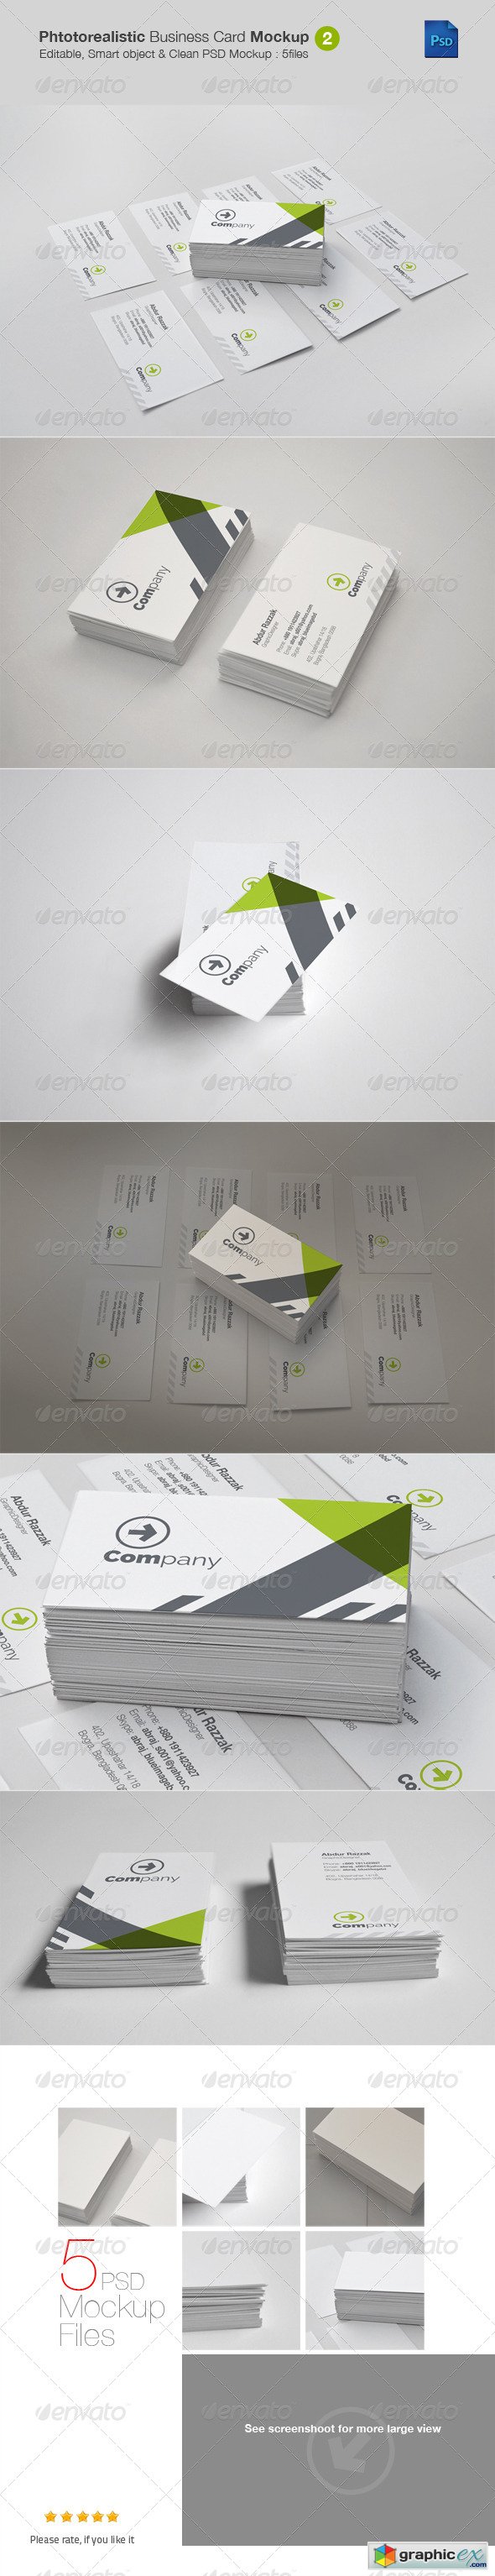 Photorealistic Business Card Mockup v2